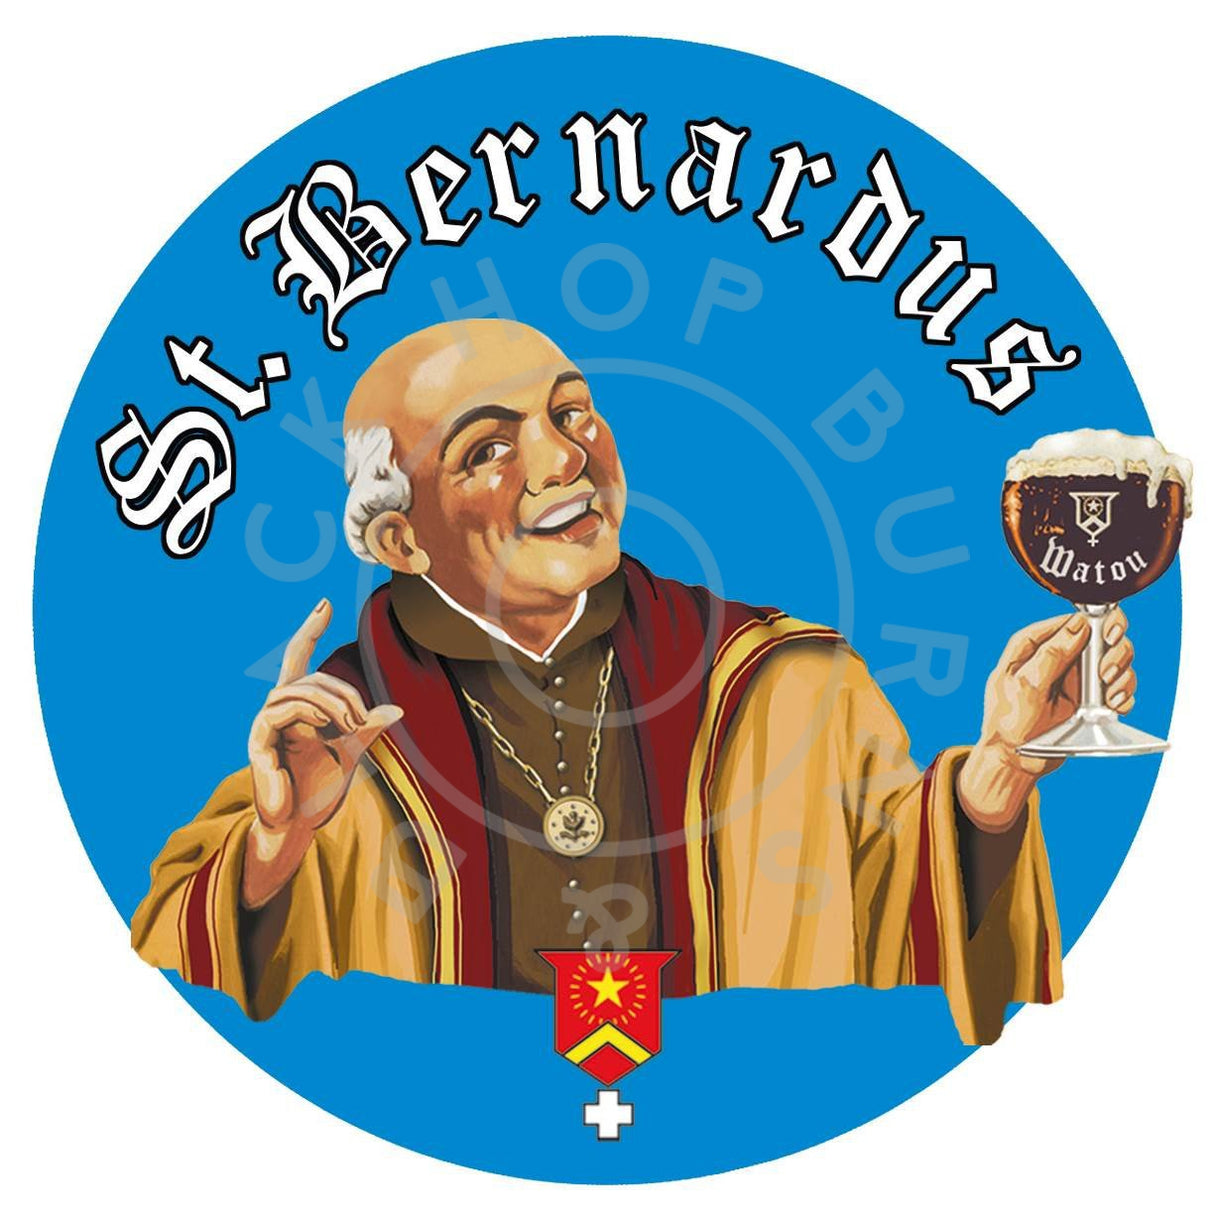 St Bernardus Abt 12 10% (330ml)-Hop Burns & Black